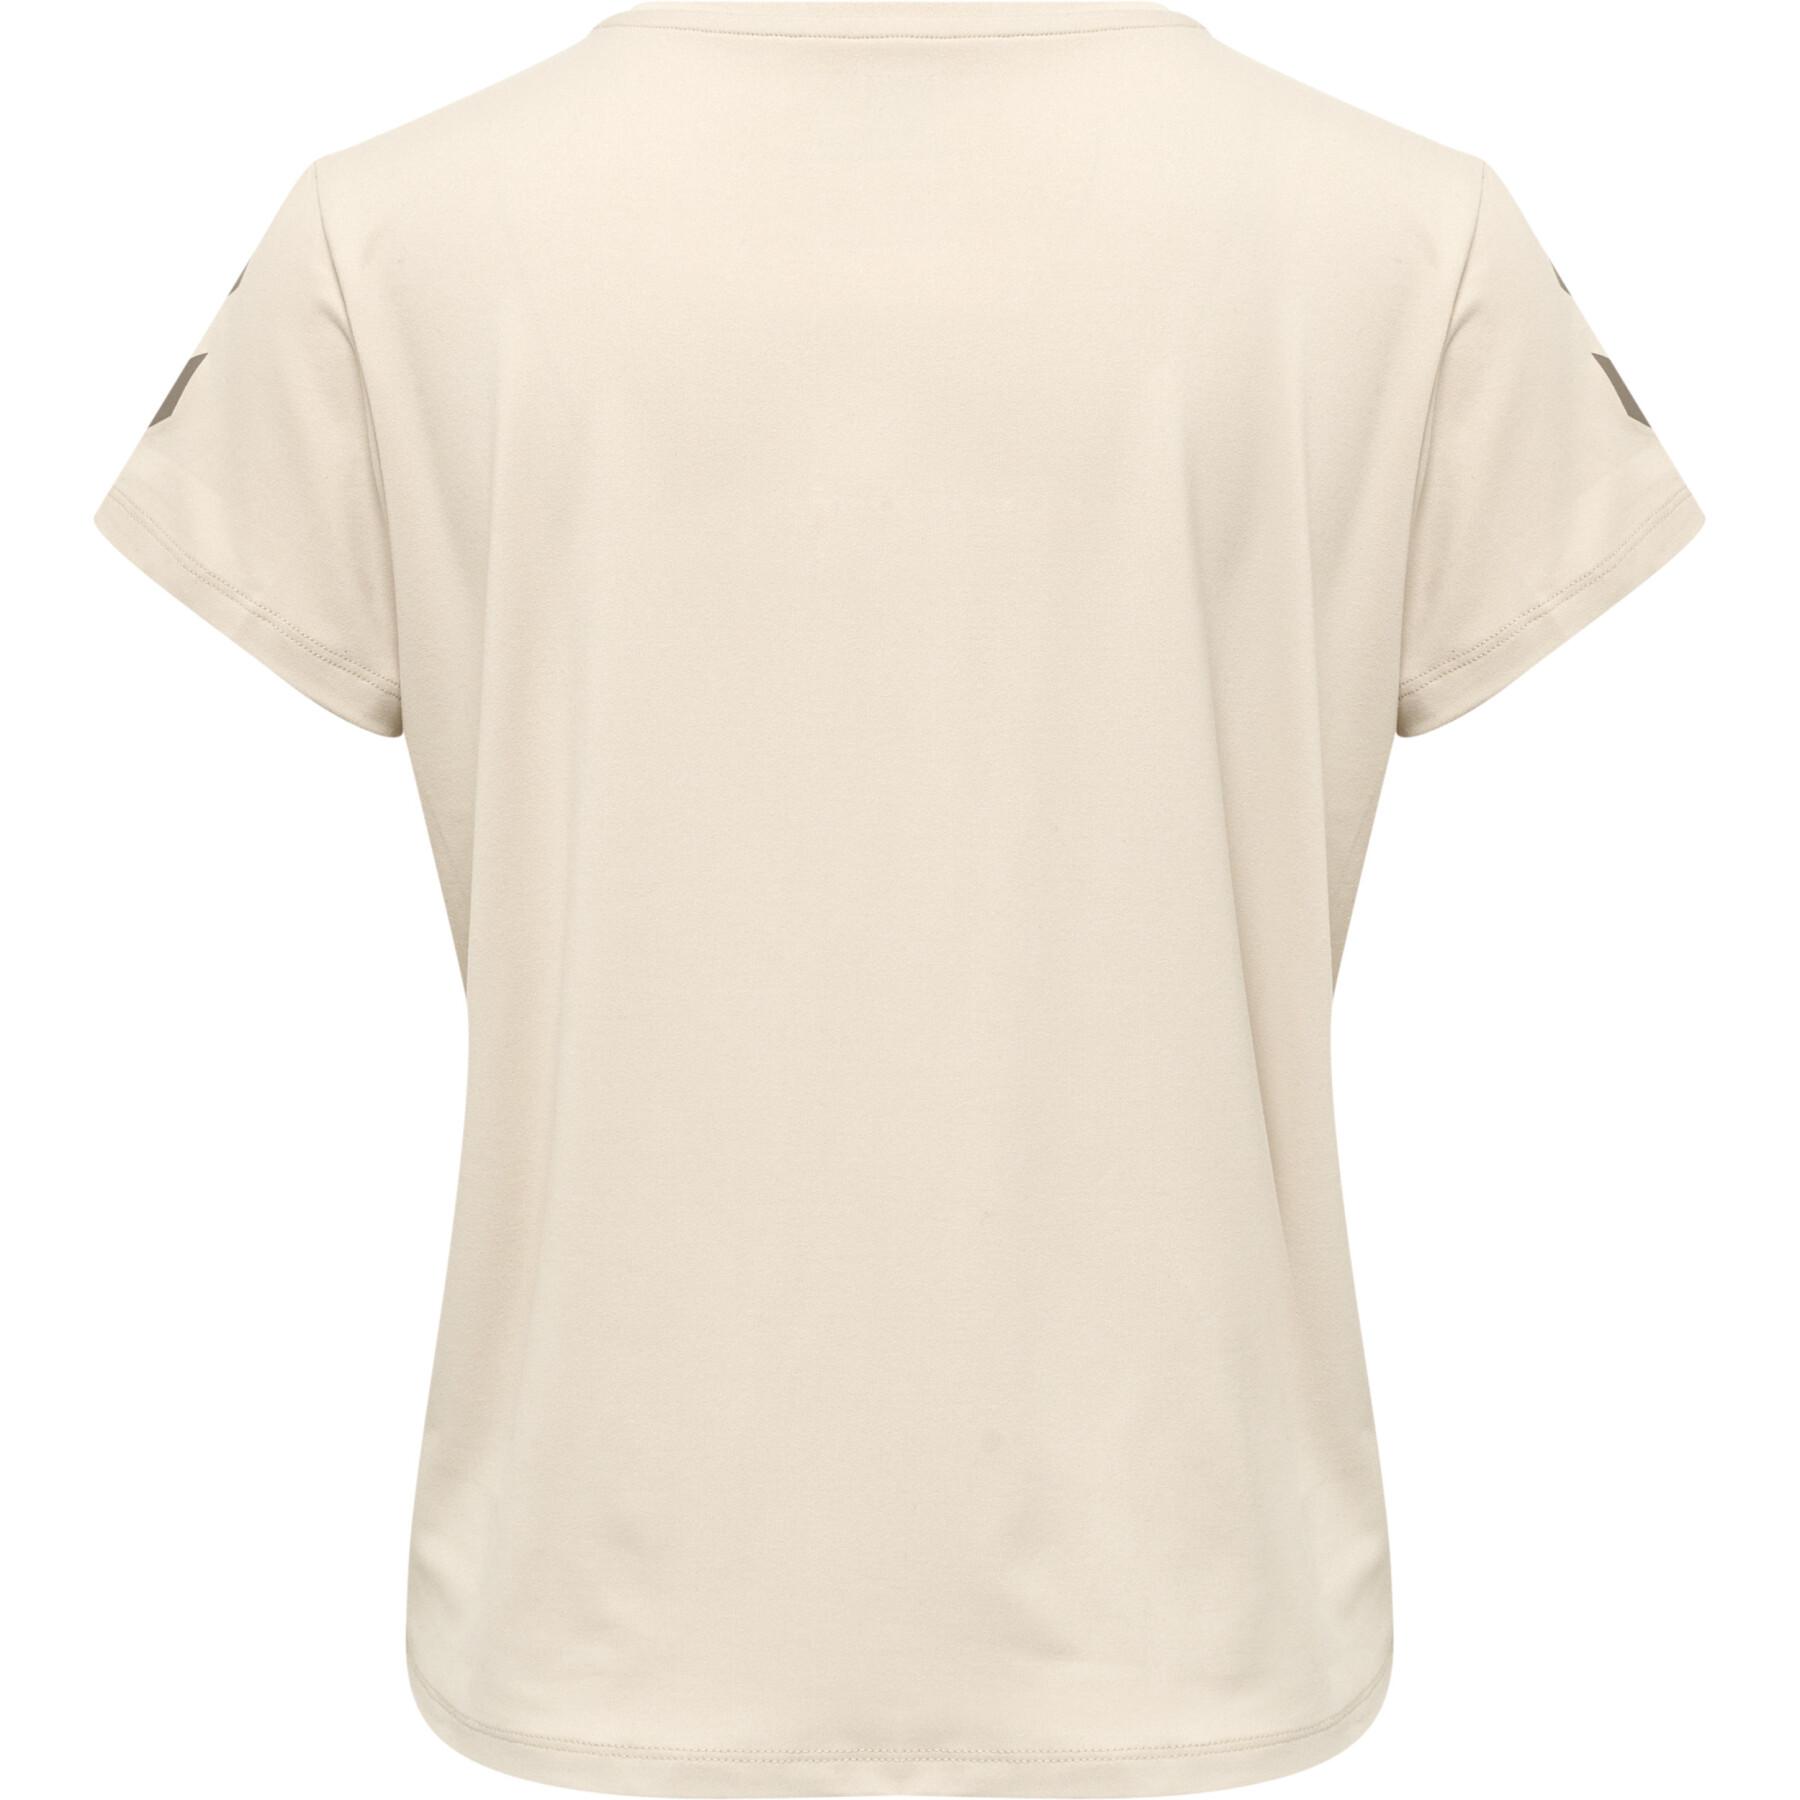 Taylor - Hummel Sportswear - Hummel MT - Women\'s T-shirt T-Shirts T-Shirts